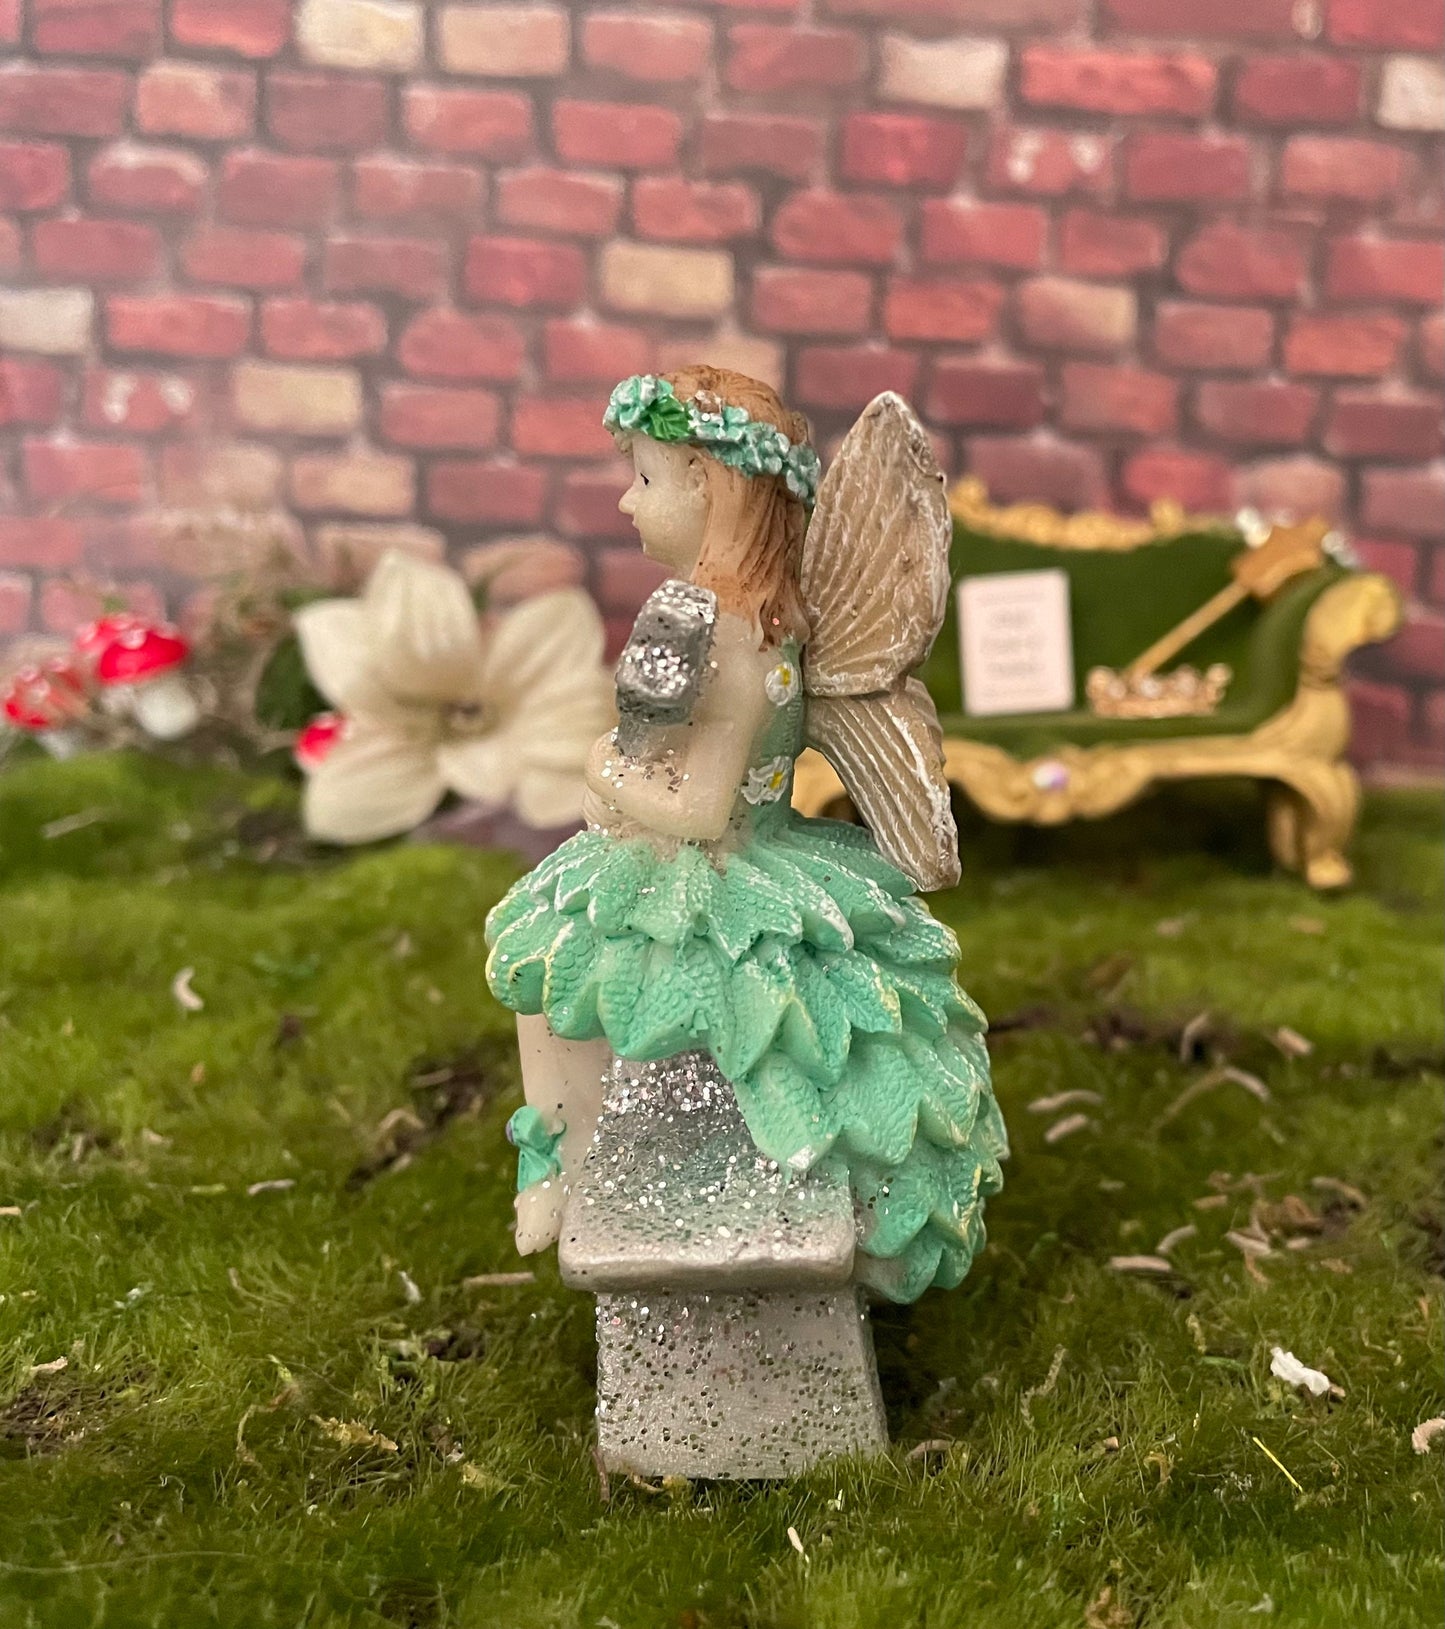 Sweet magical fairy girl sitting on a glittery star!